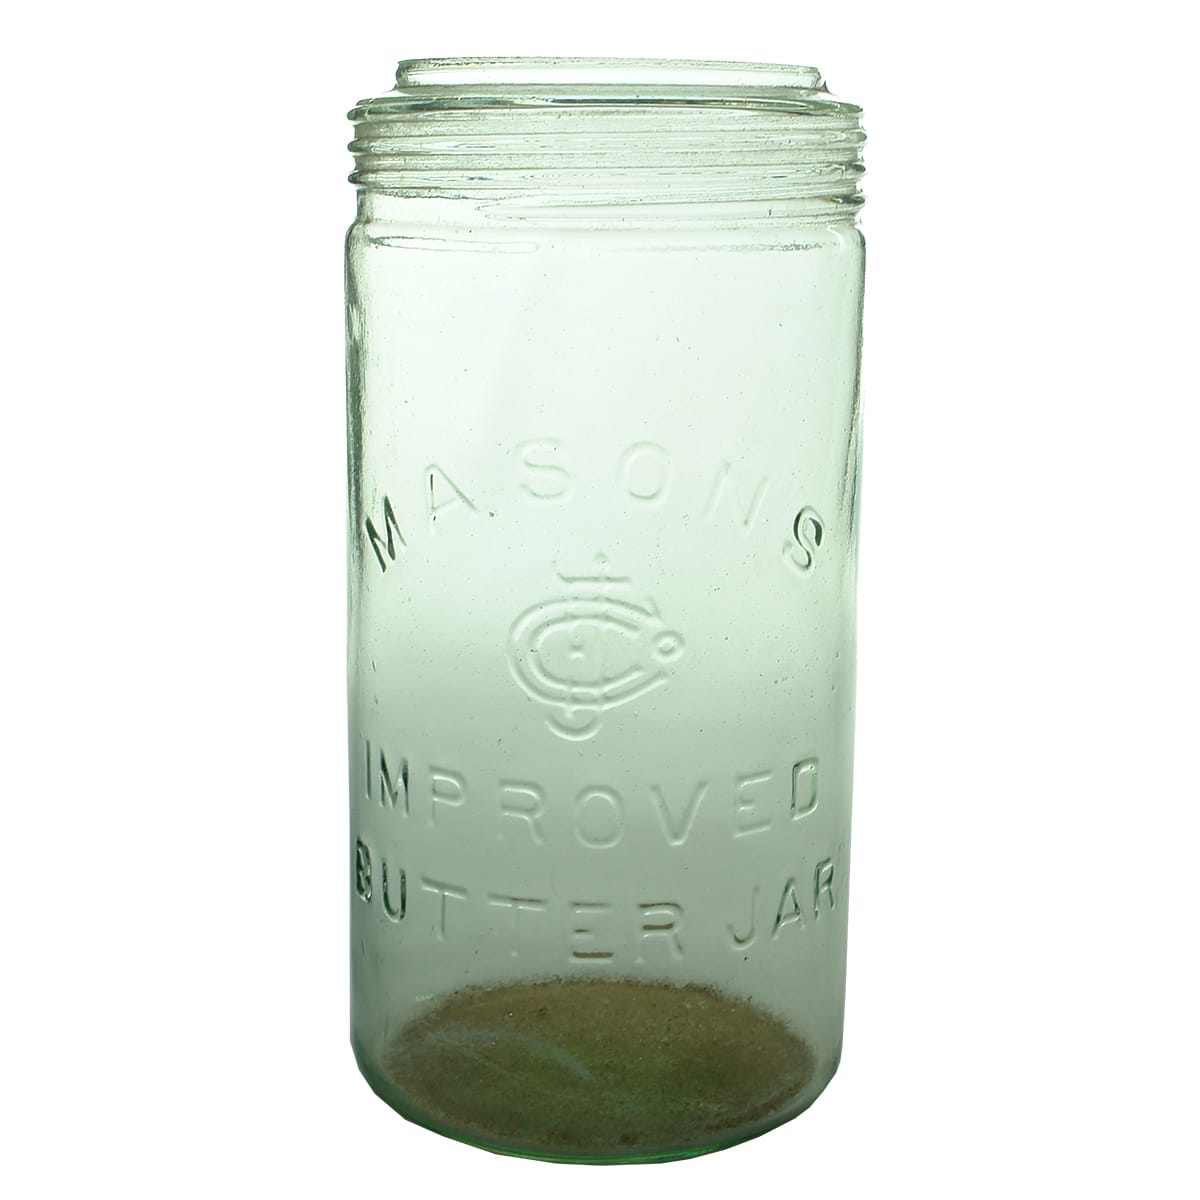 Butter Jar. Mason's Improved. Aqua. Half Gallon.